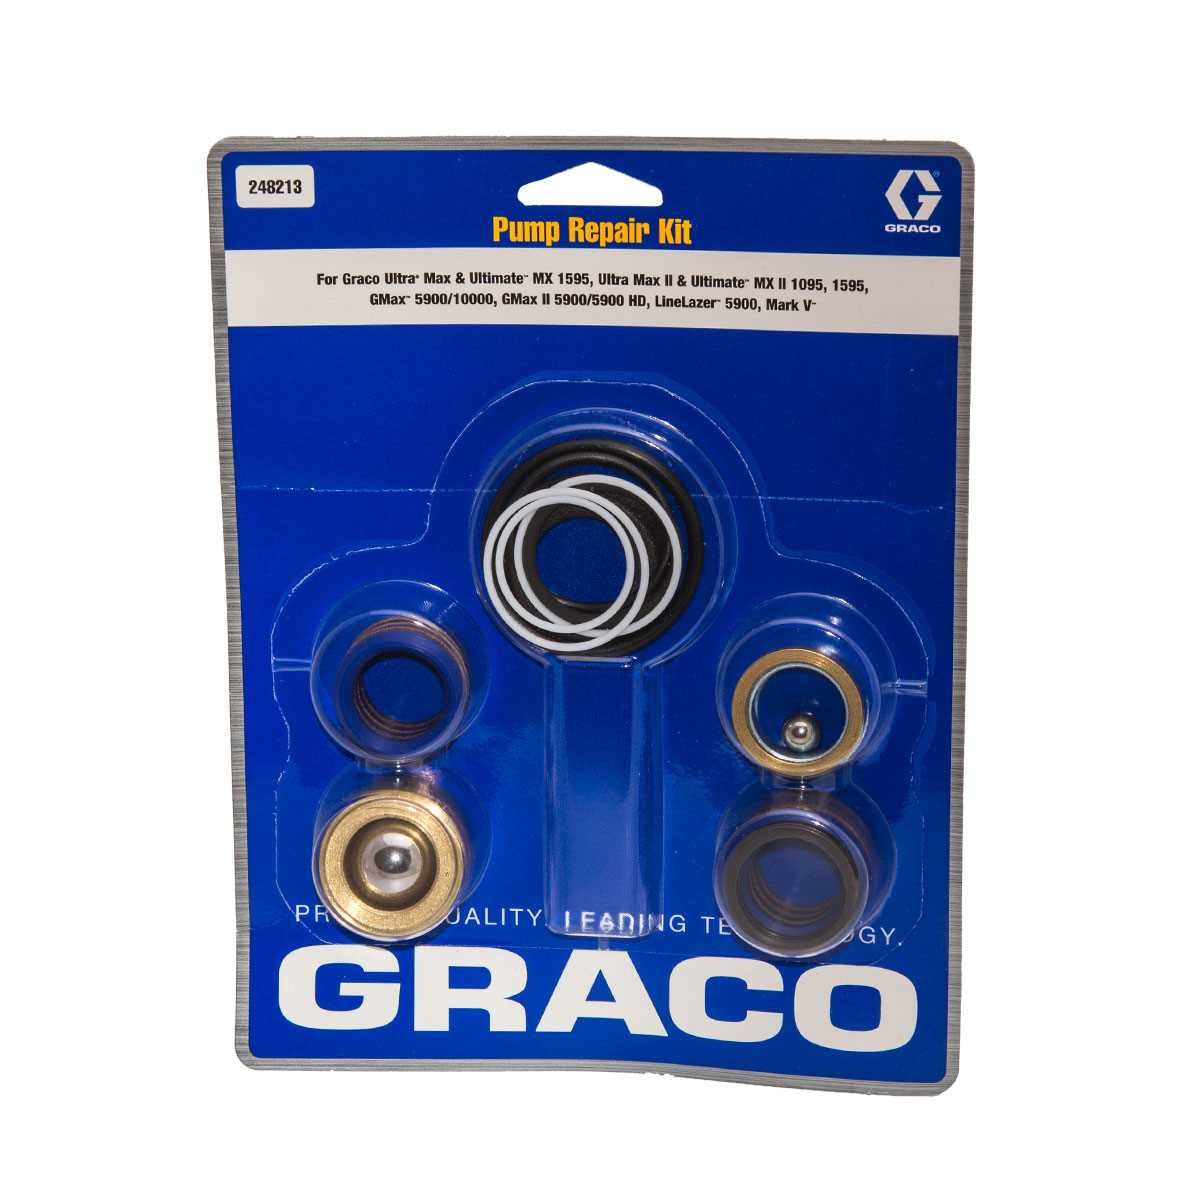 Pump Repair Kit Graco Mark V